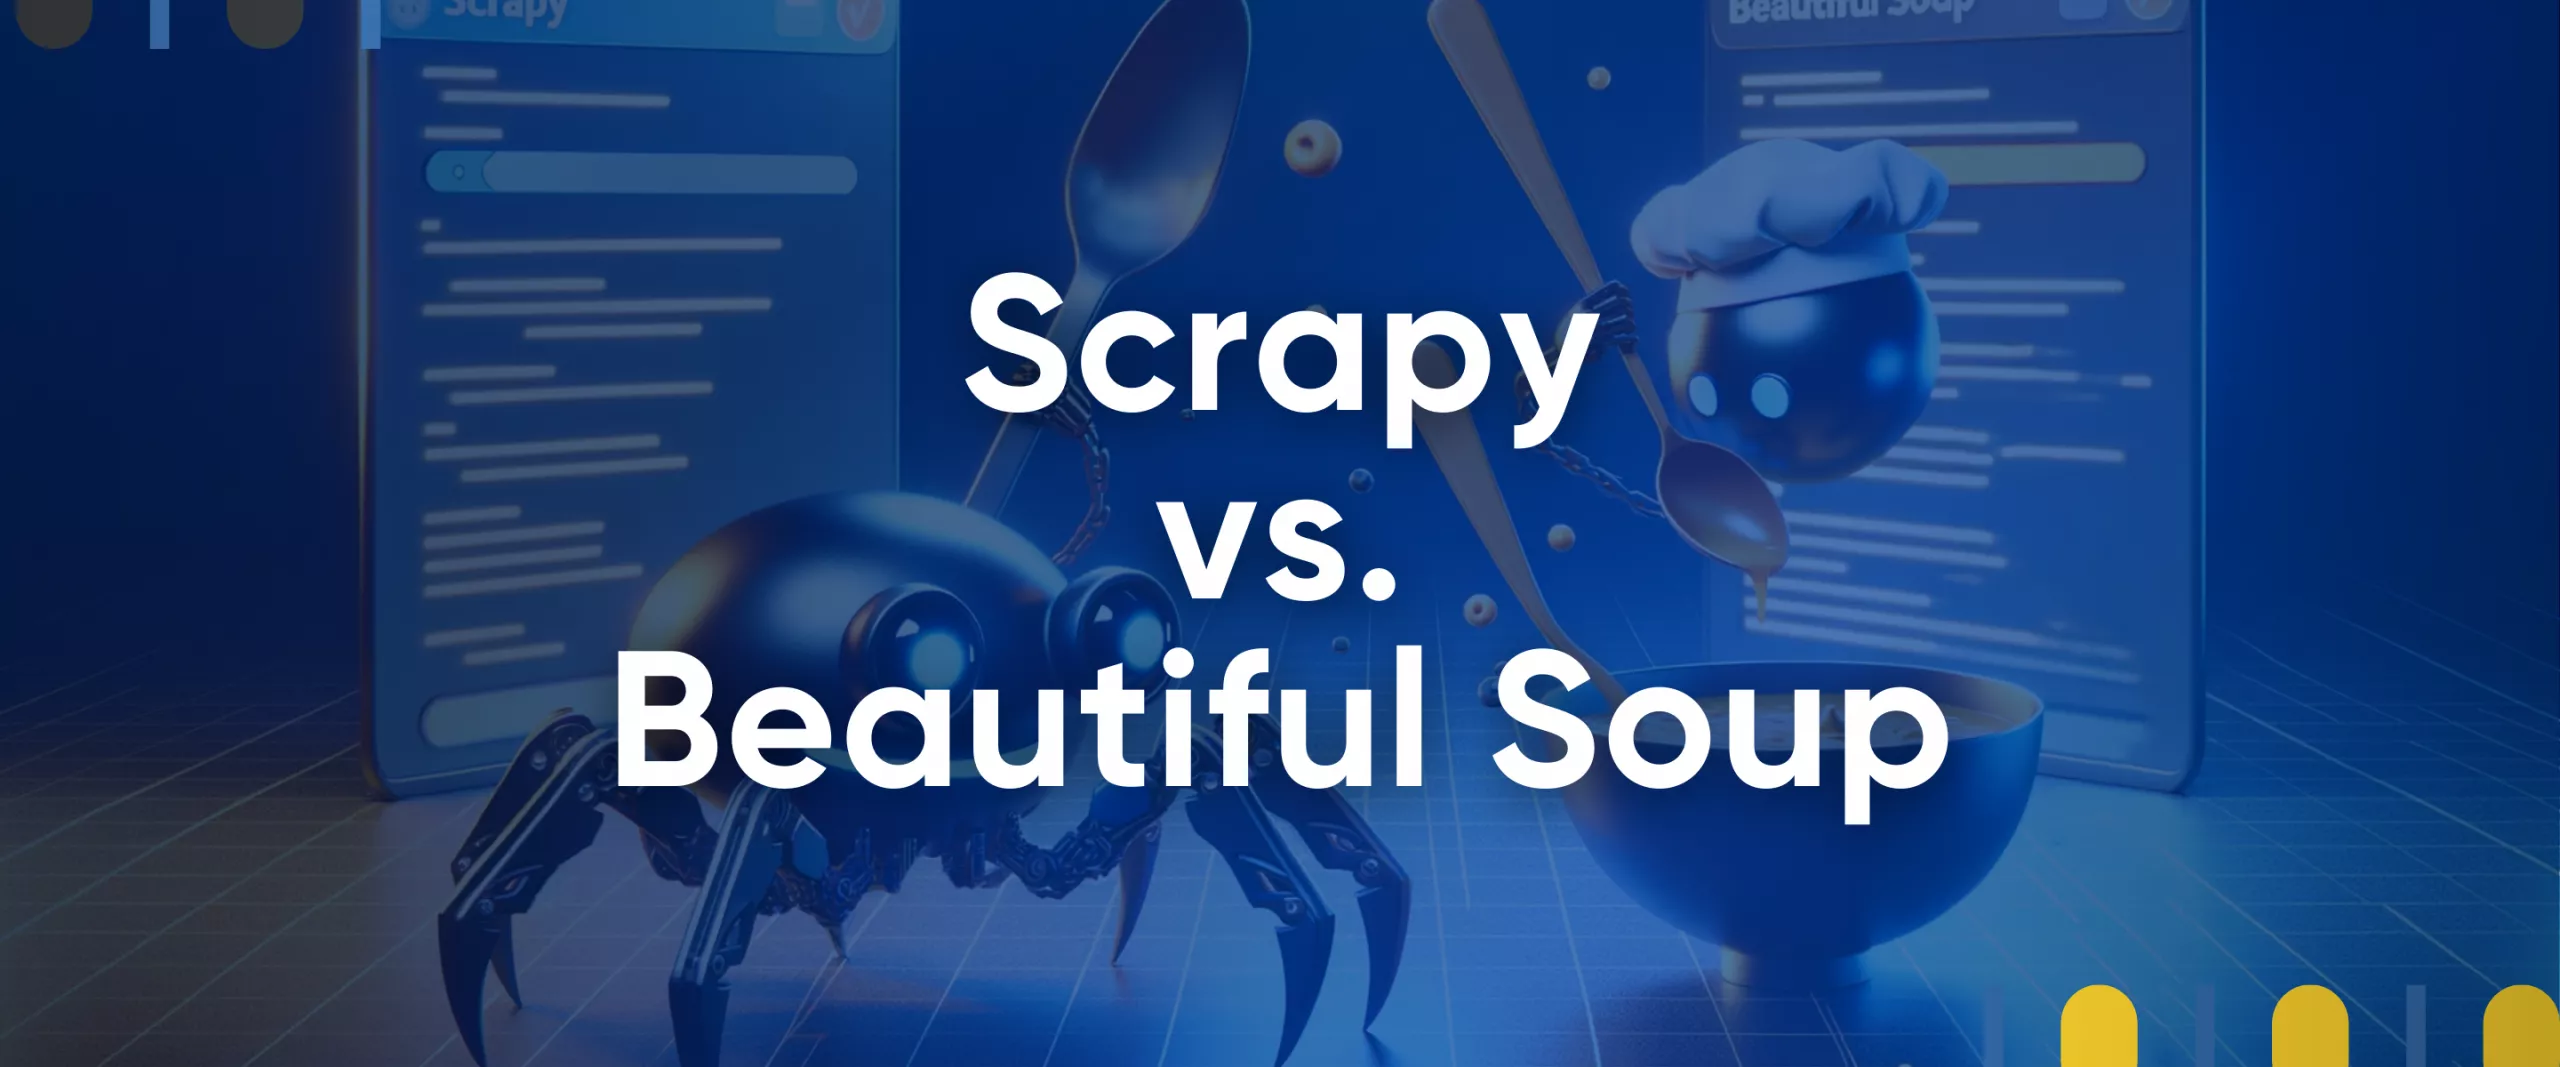 Scrapy vs. Beautiful Soup for Web Scraping